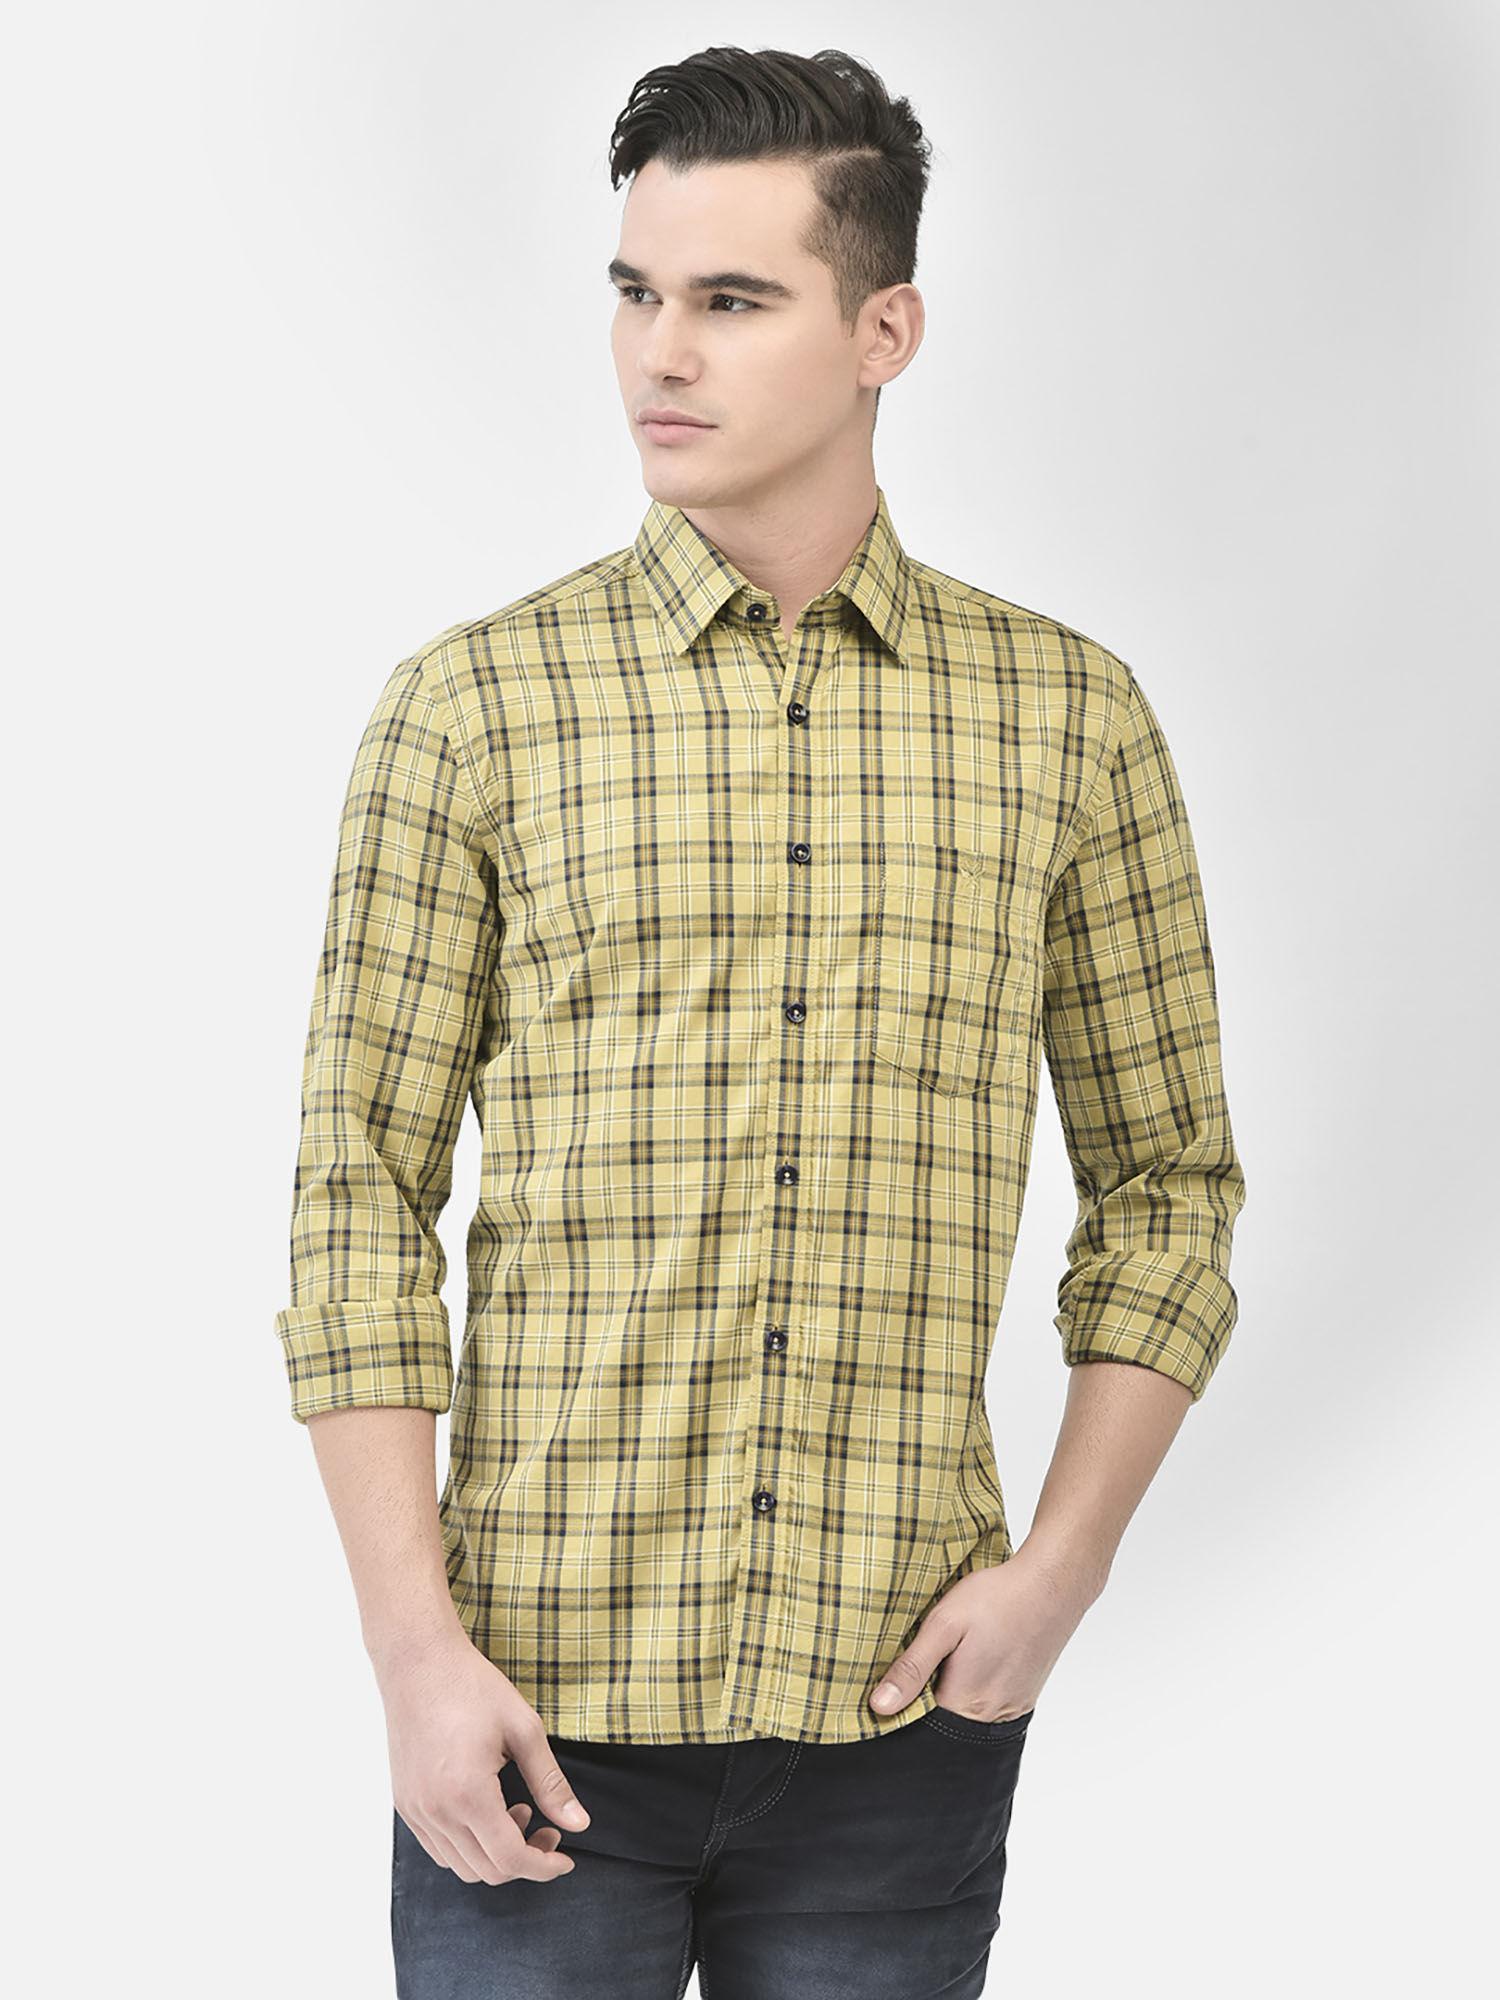 men's mustard checked shirt